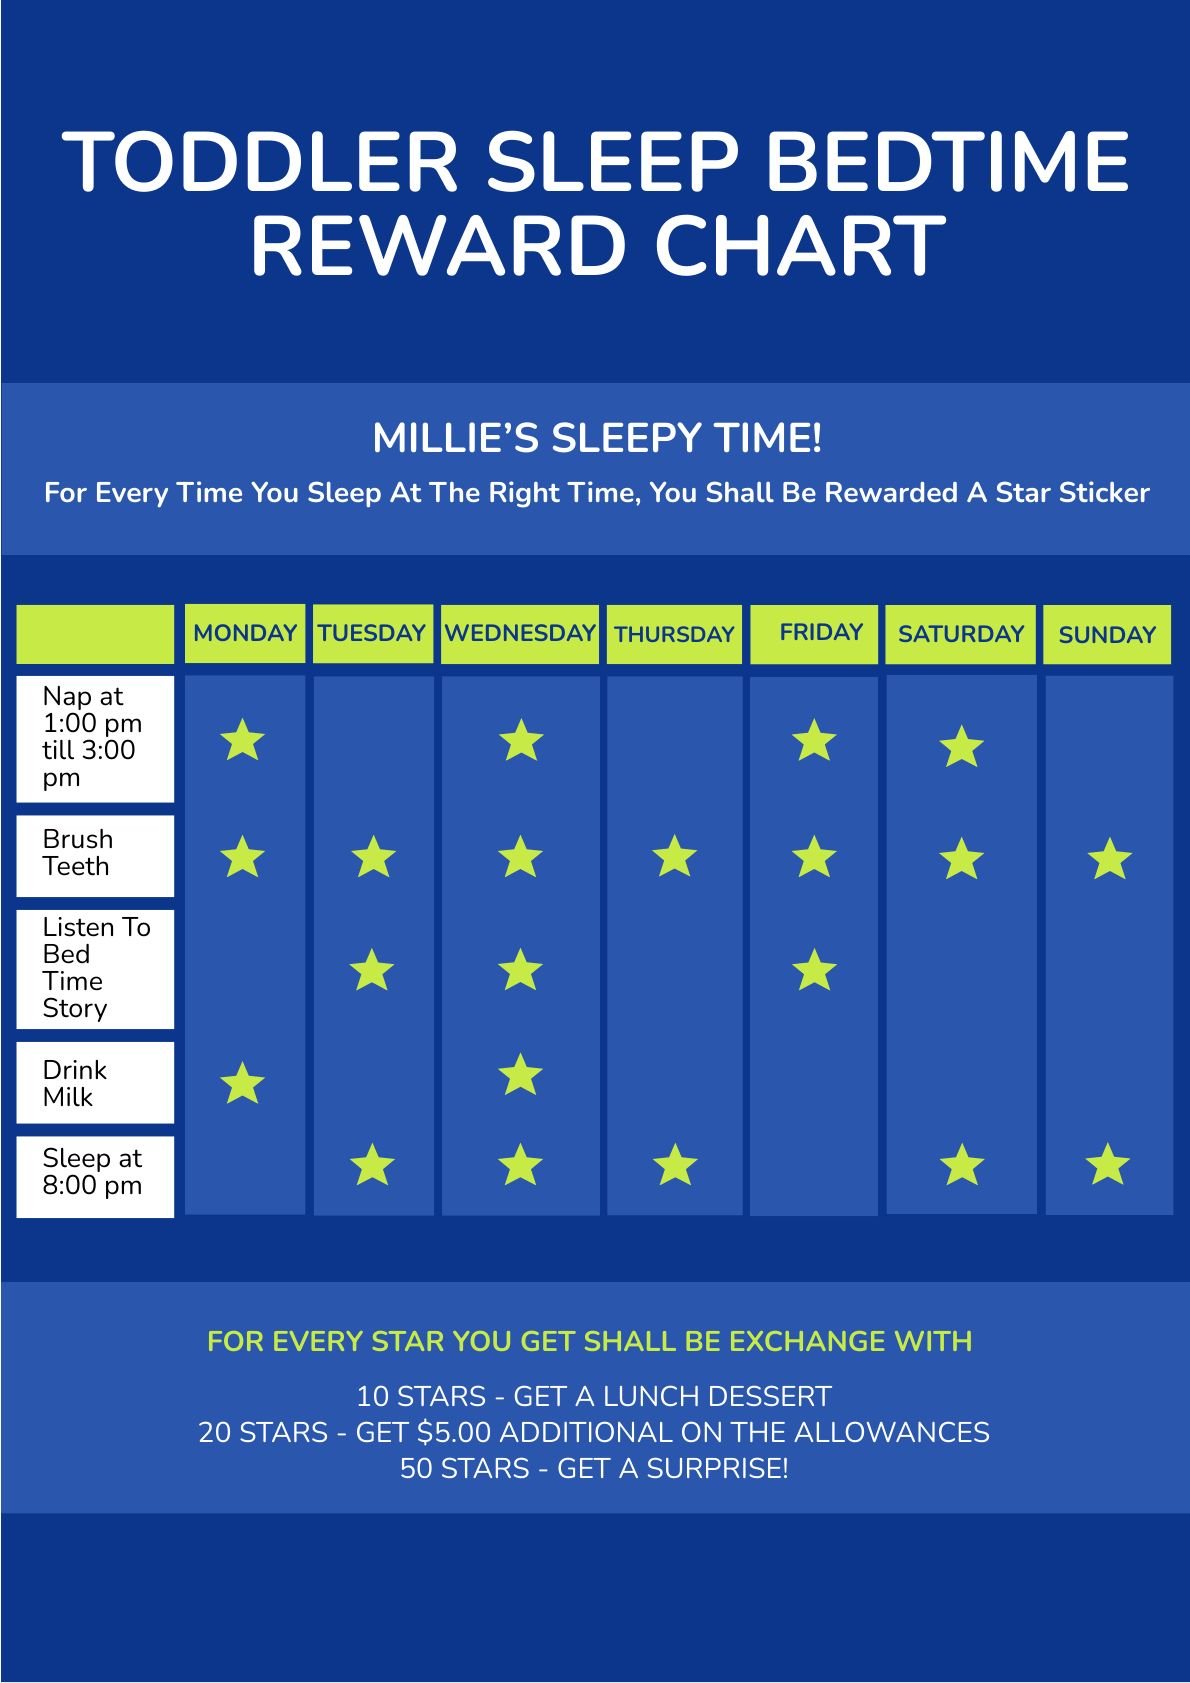 Toddler Sleep Bedtime Reward Chart in PDF, Illustrator